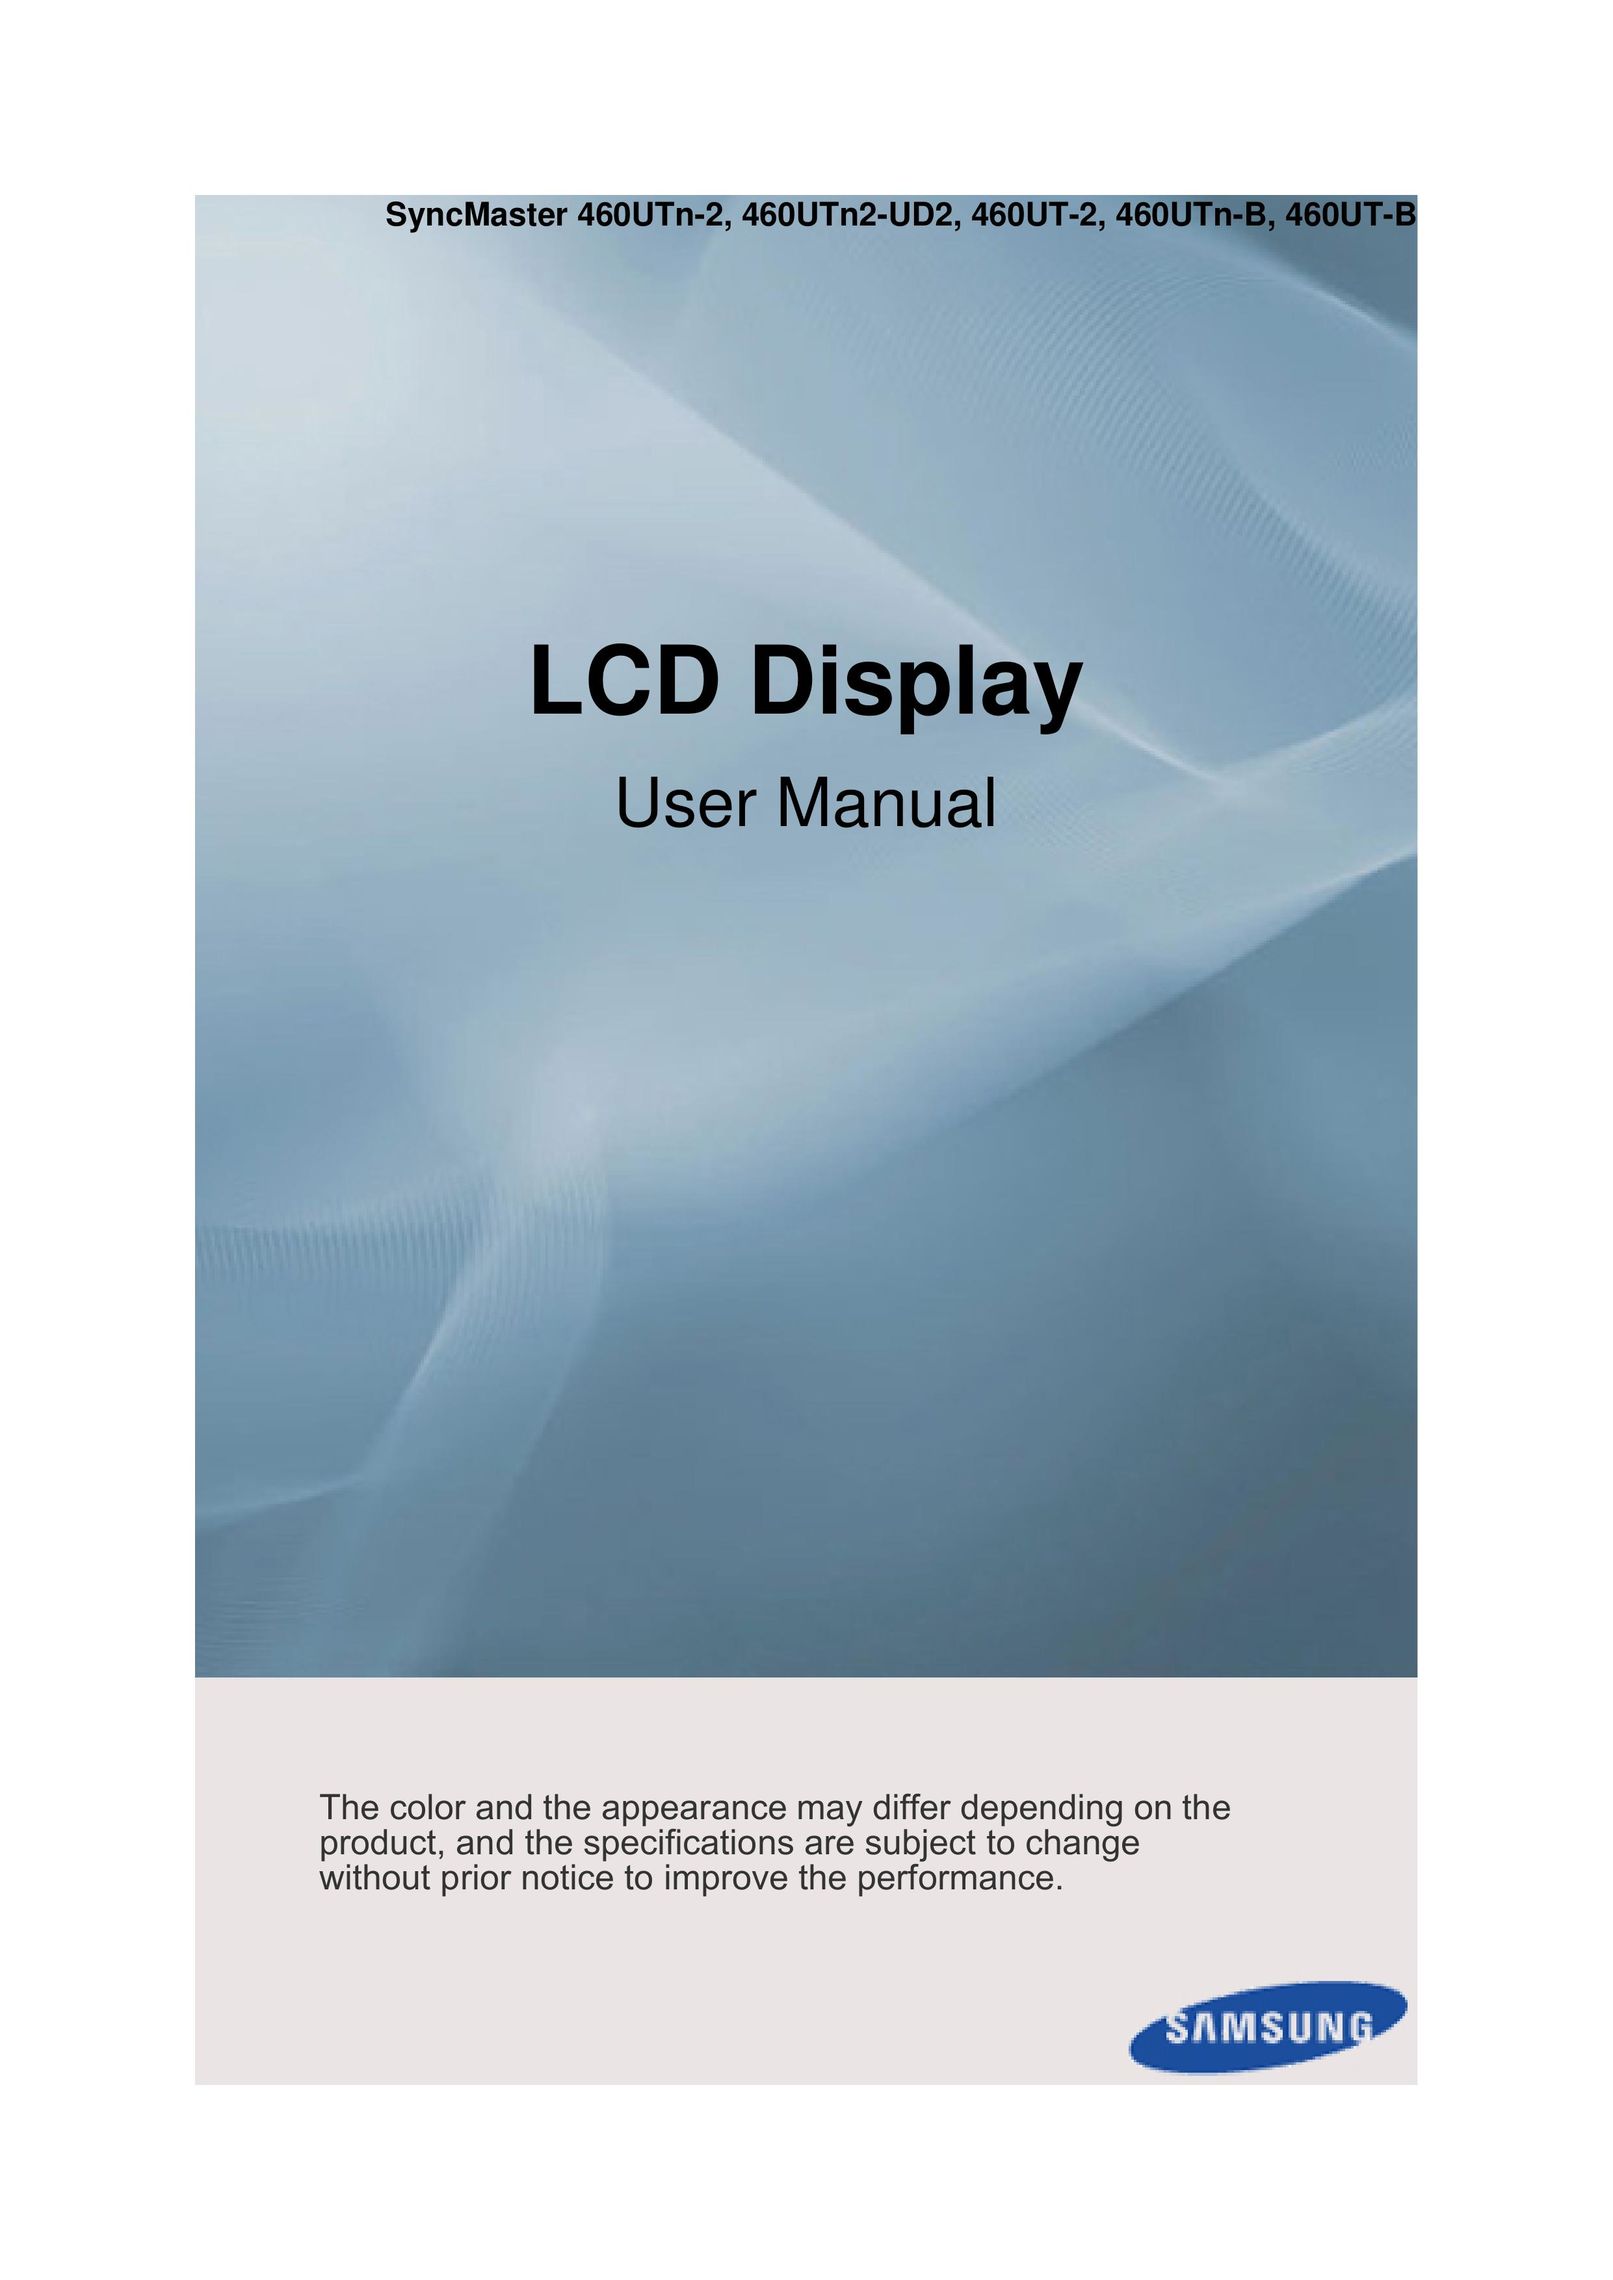 Samsung 460UT-2 Car Video System User Manual